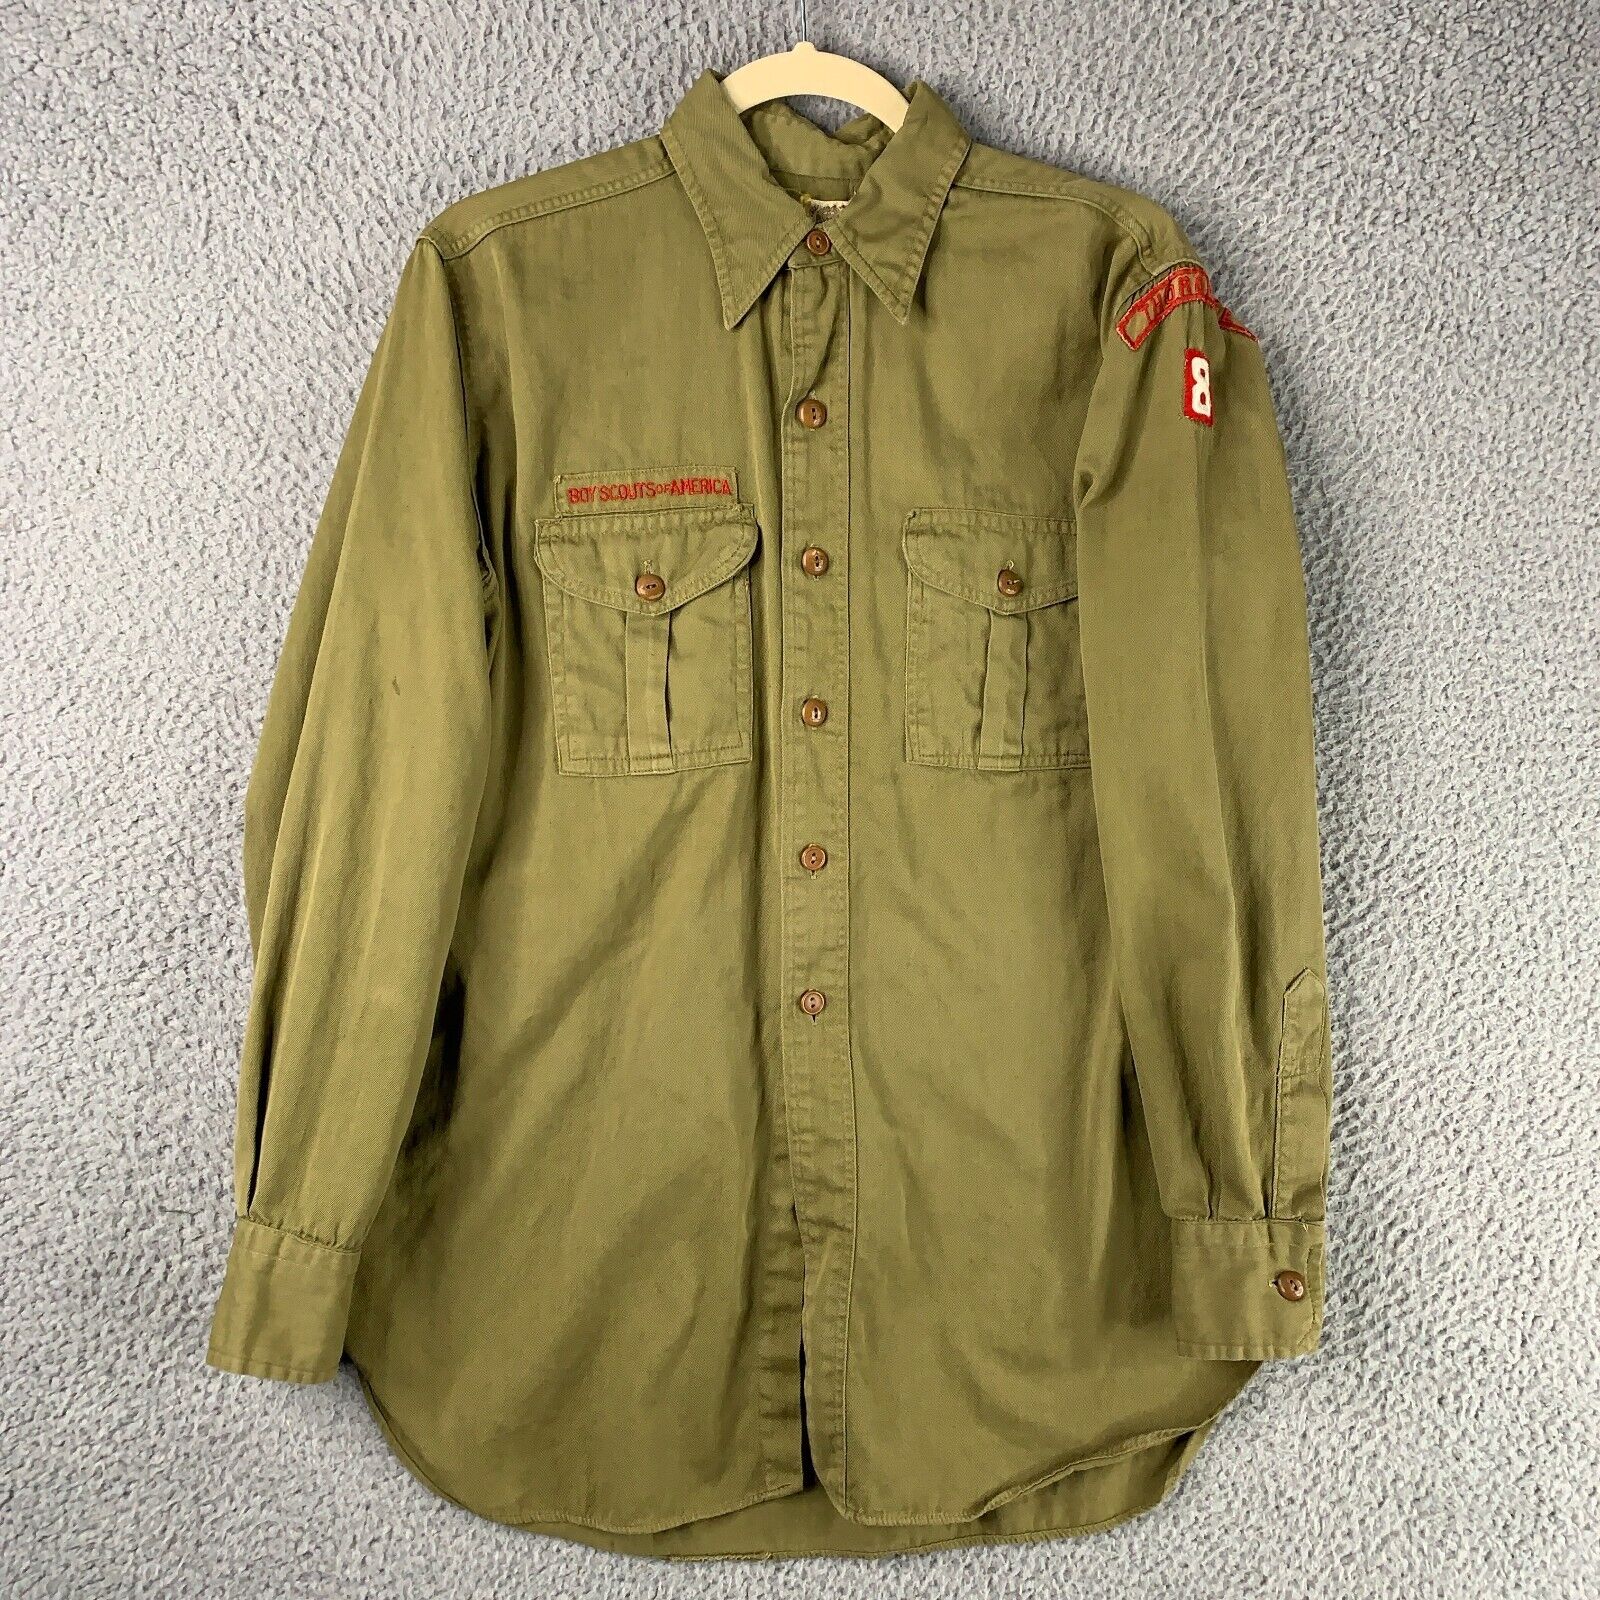 Vintage Boy Scouts Uniform Shirt Green BSA 1950s 1960s Thorofare NJ Camp Retro